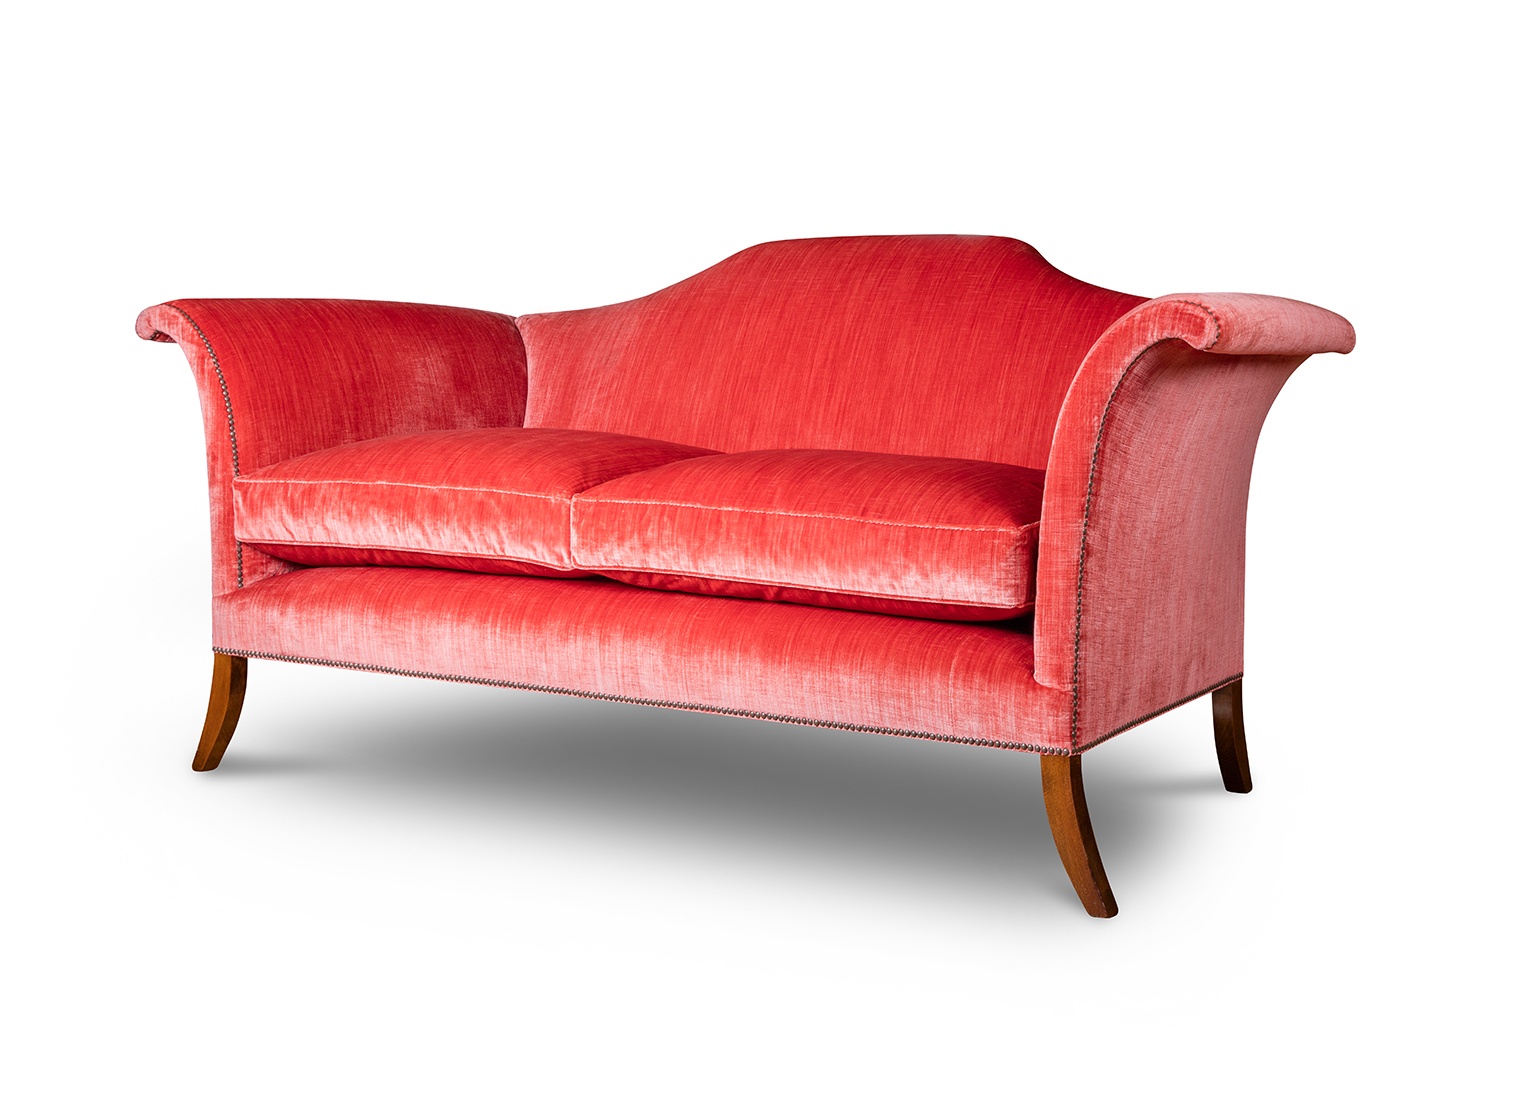 Clarence sofa in Como silk velvet - Pompeiian red - Beaumont & Fletcher